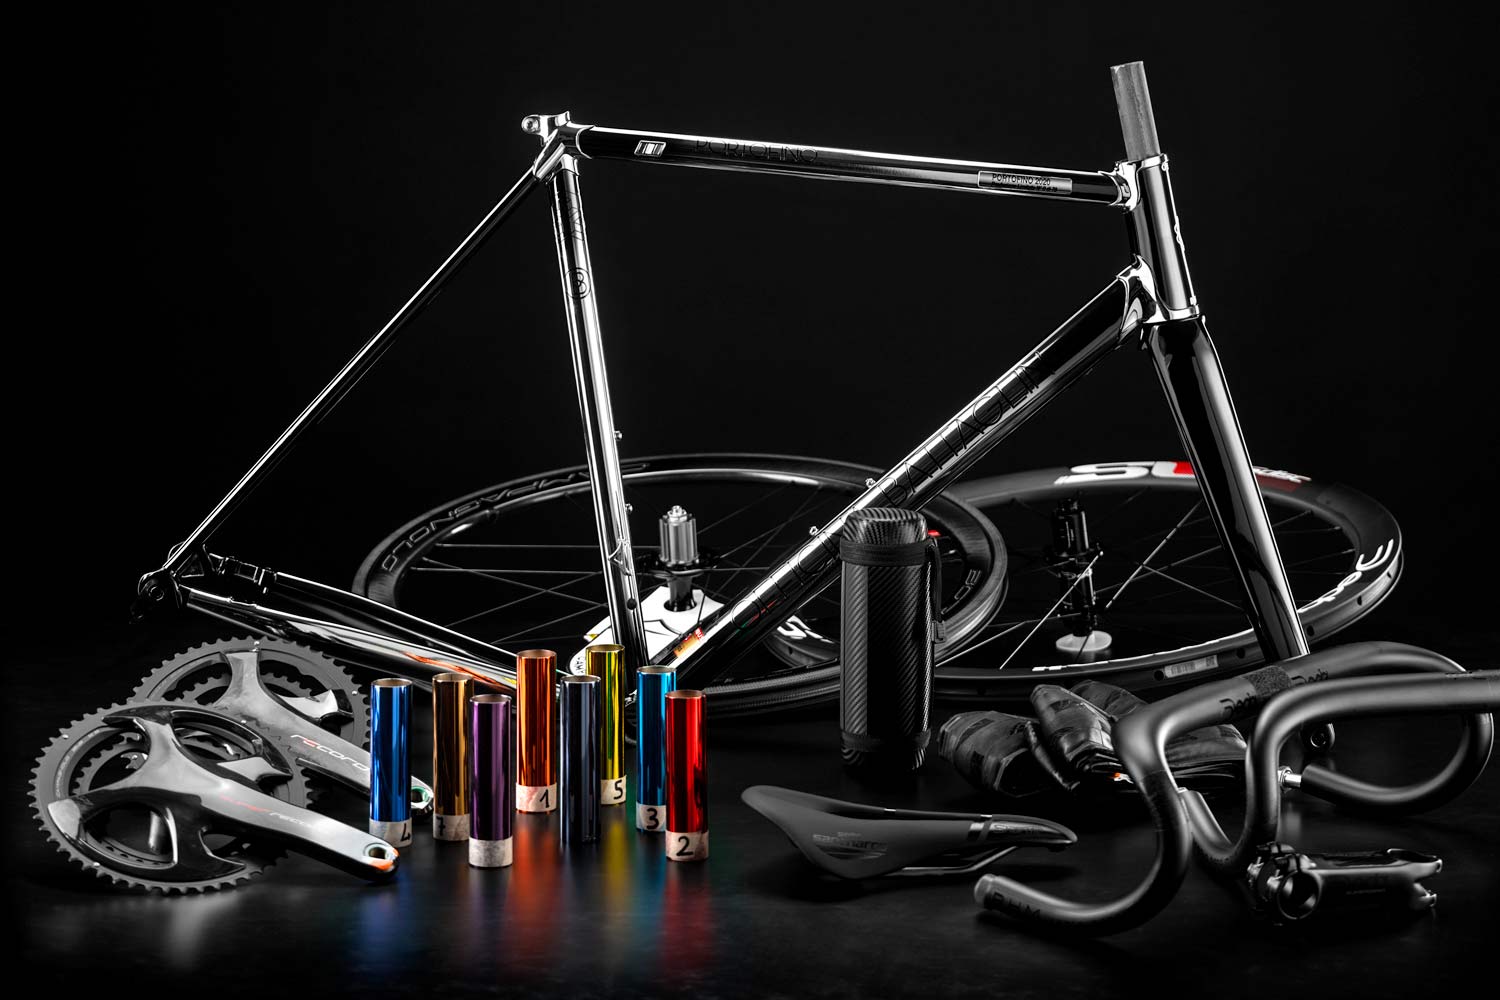 2020 Battaglin Portofino Disc road bike, limited edition Made-in-Italy, custom oversized lugged steel disc brake classic road bike